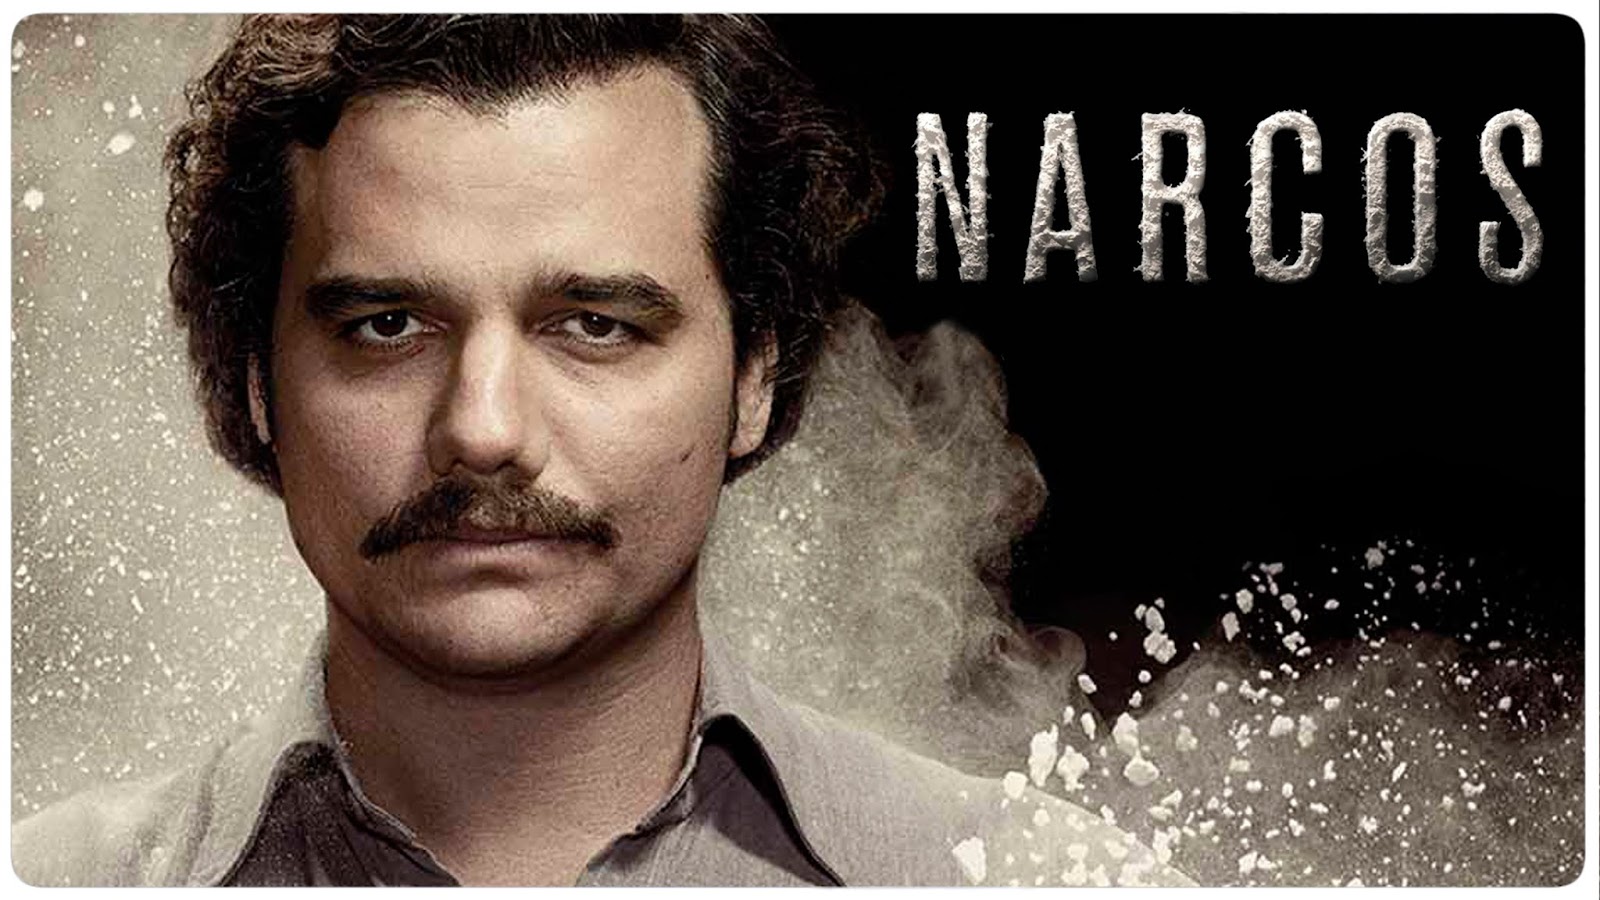 Narcos Netflix